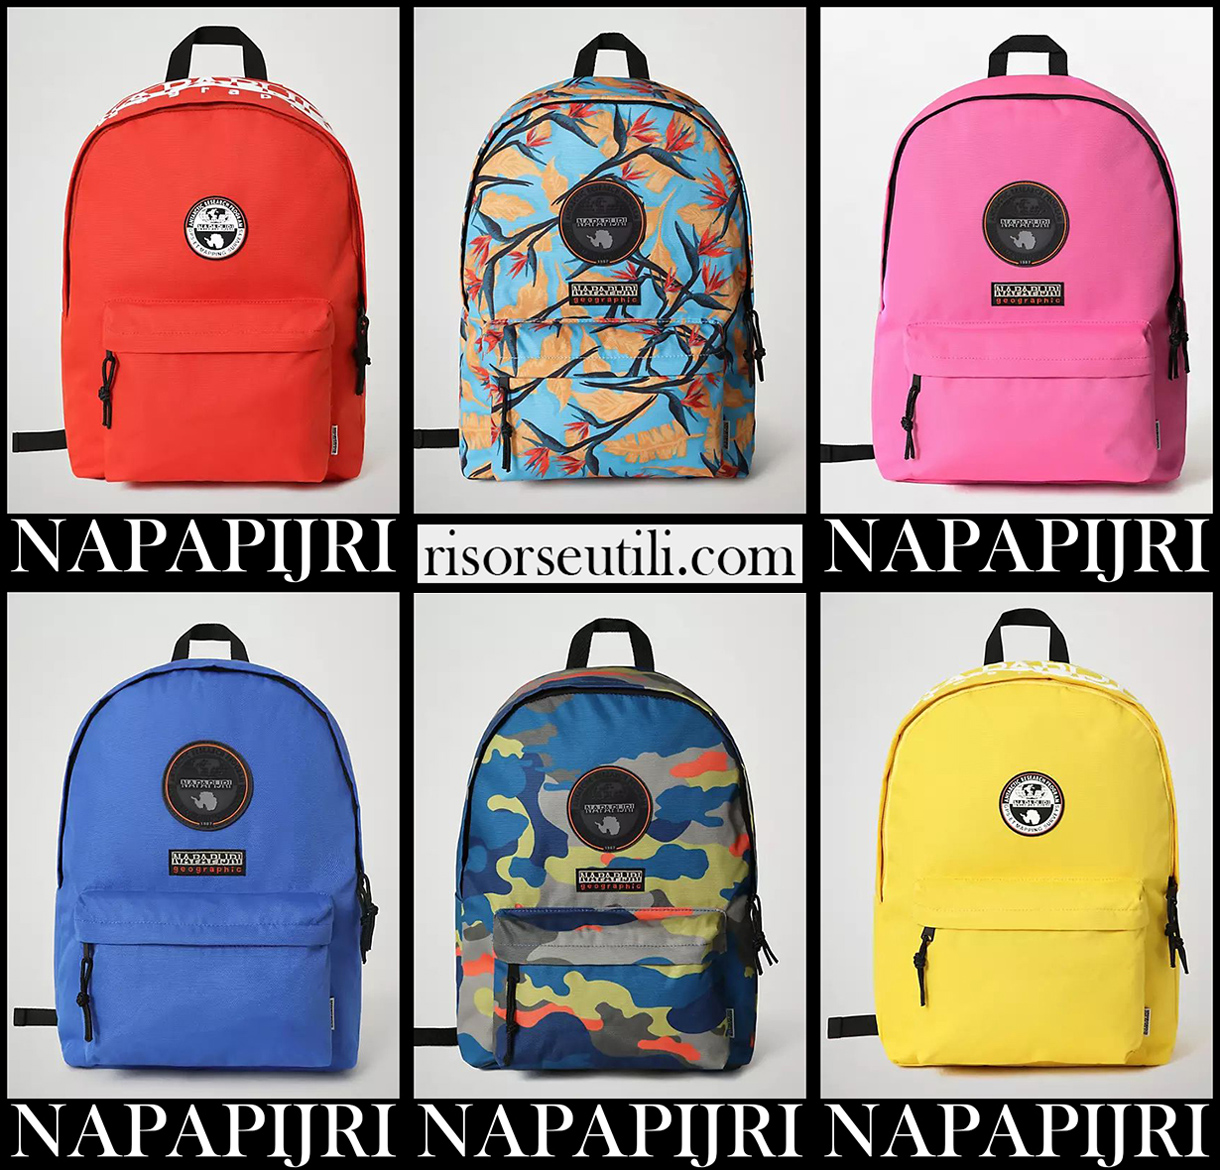 New arrivals Napapijri backpacks 2021 2022 school free time